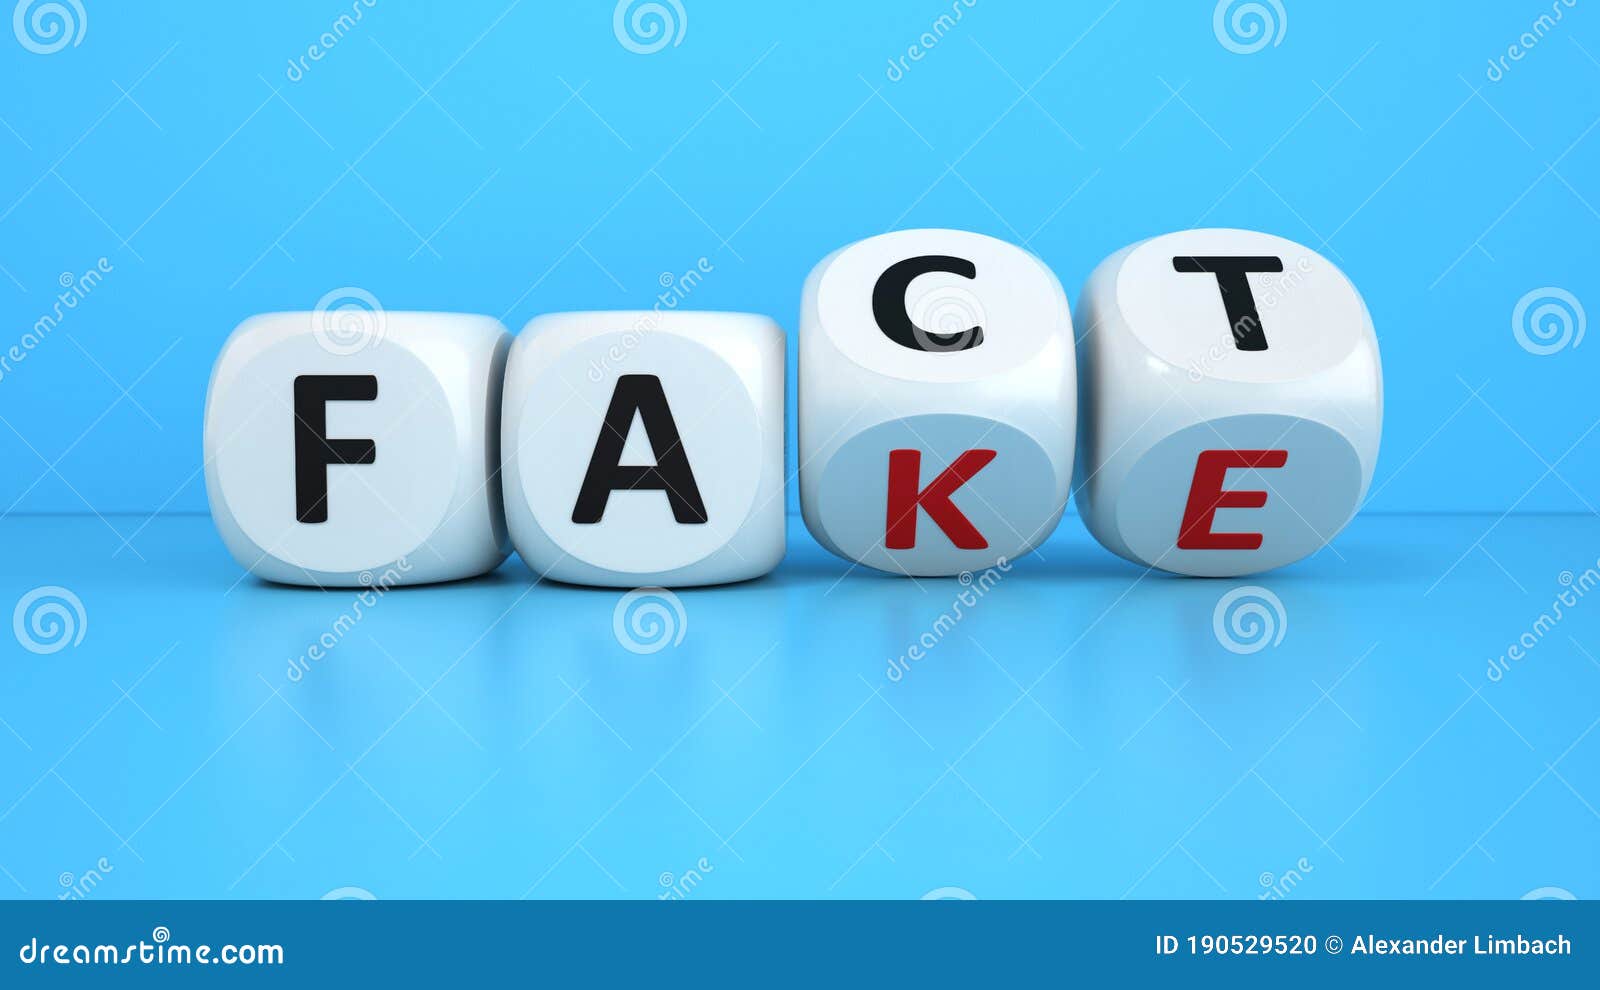 Fake Fact Cubes stock illustration. Illustration of fraud - 190529520